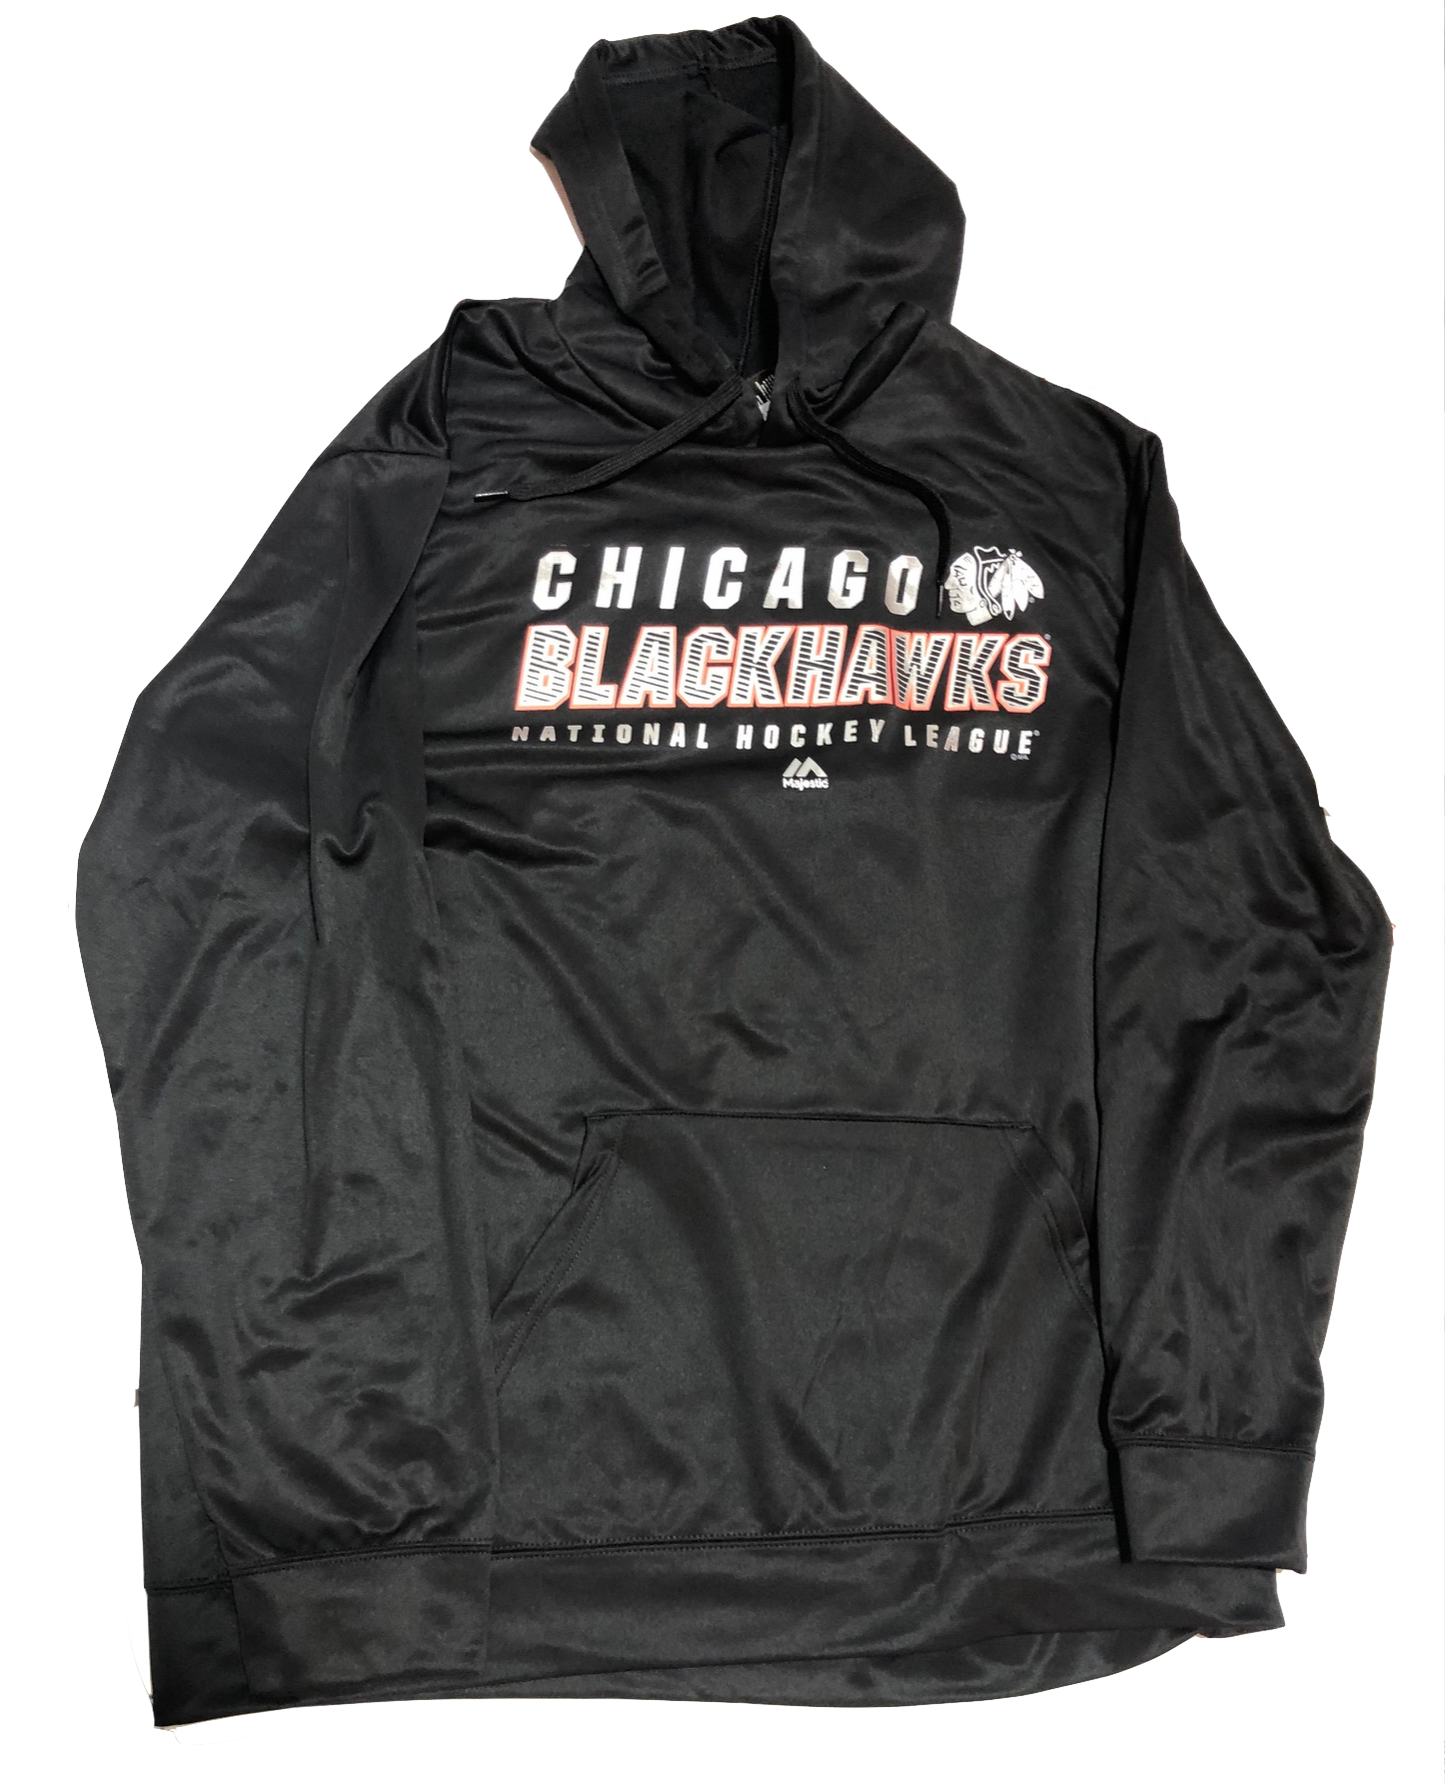 Chicago Blackhawks Adult All Time Save Fleece Hooded Sweatshirt By Majestic